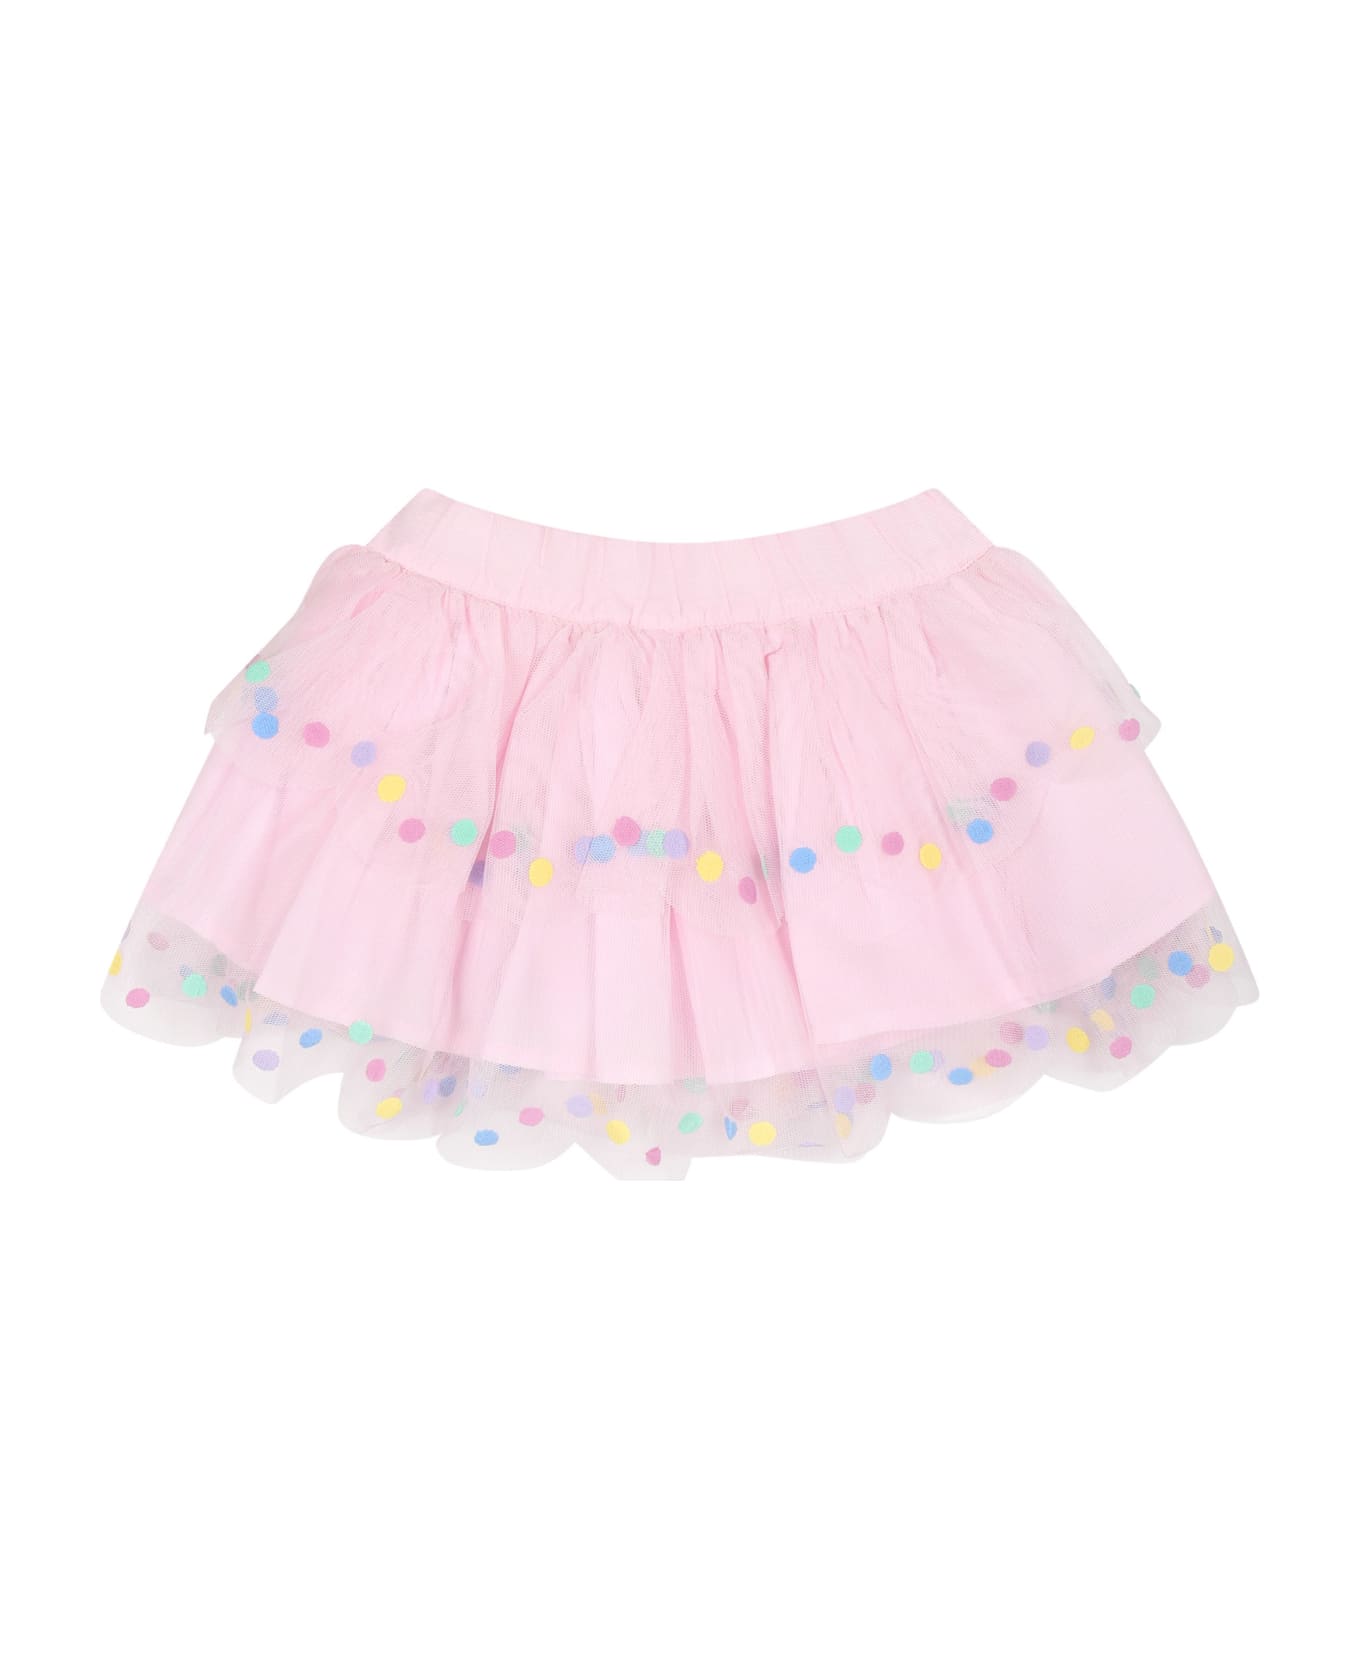 Stella McCartney Kids Pink Tulle Skirt For Baby Girl - Pink ボトムス